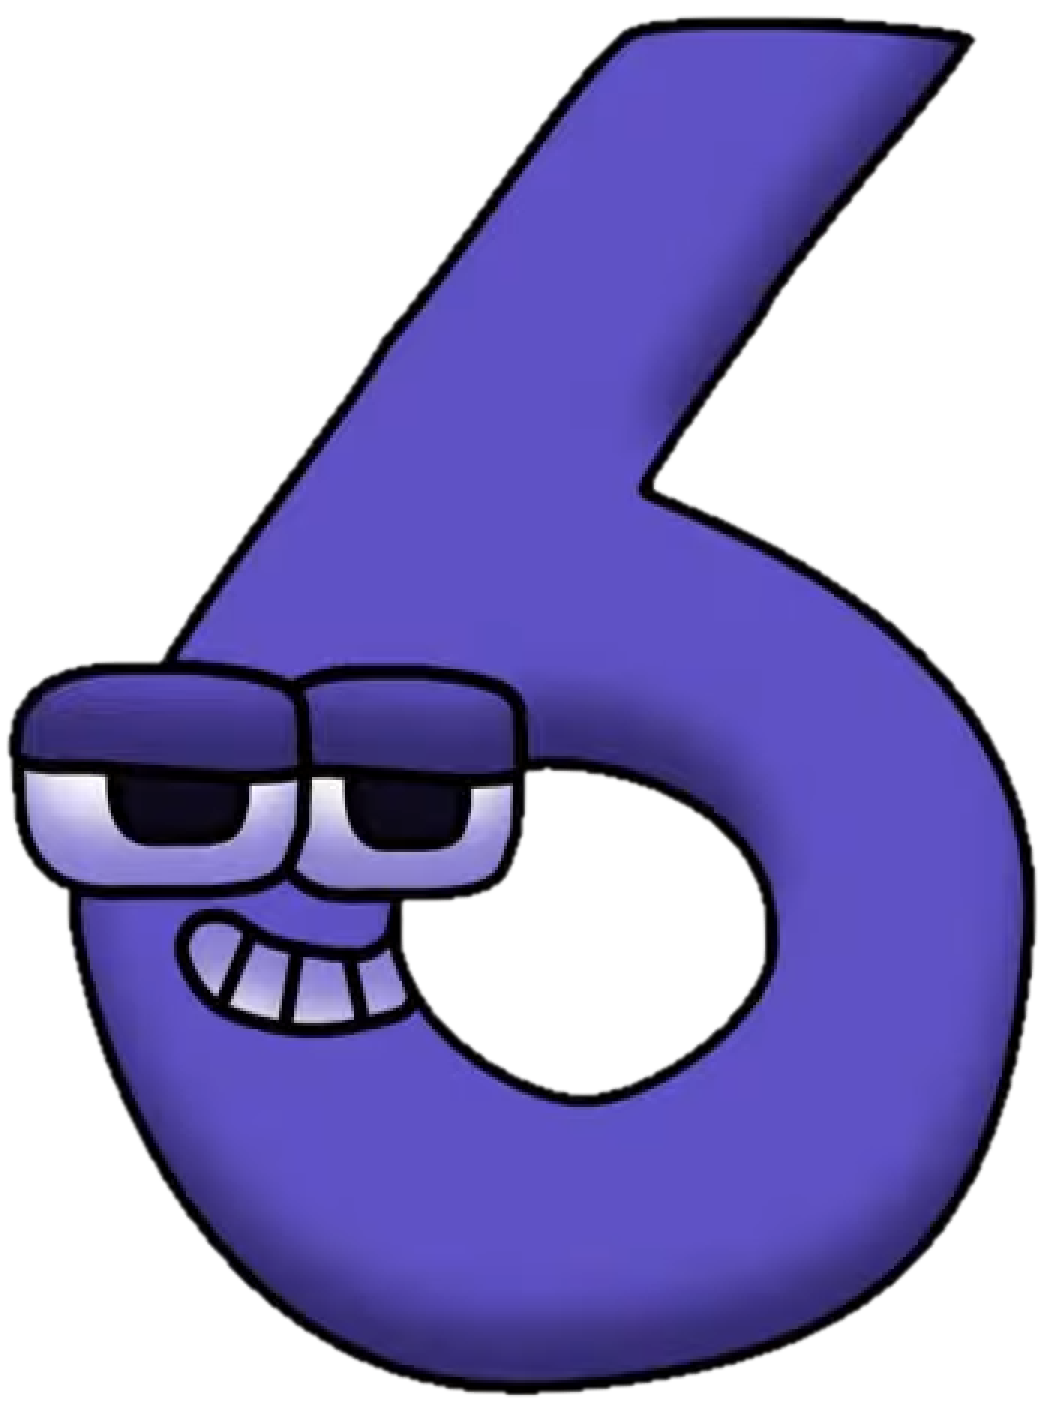 7, Hktito's Number Lore Wiki